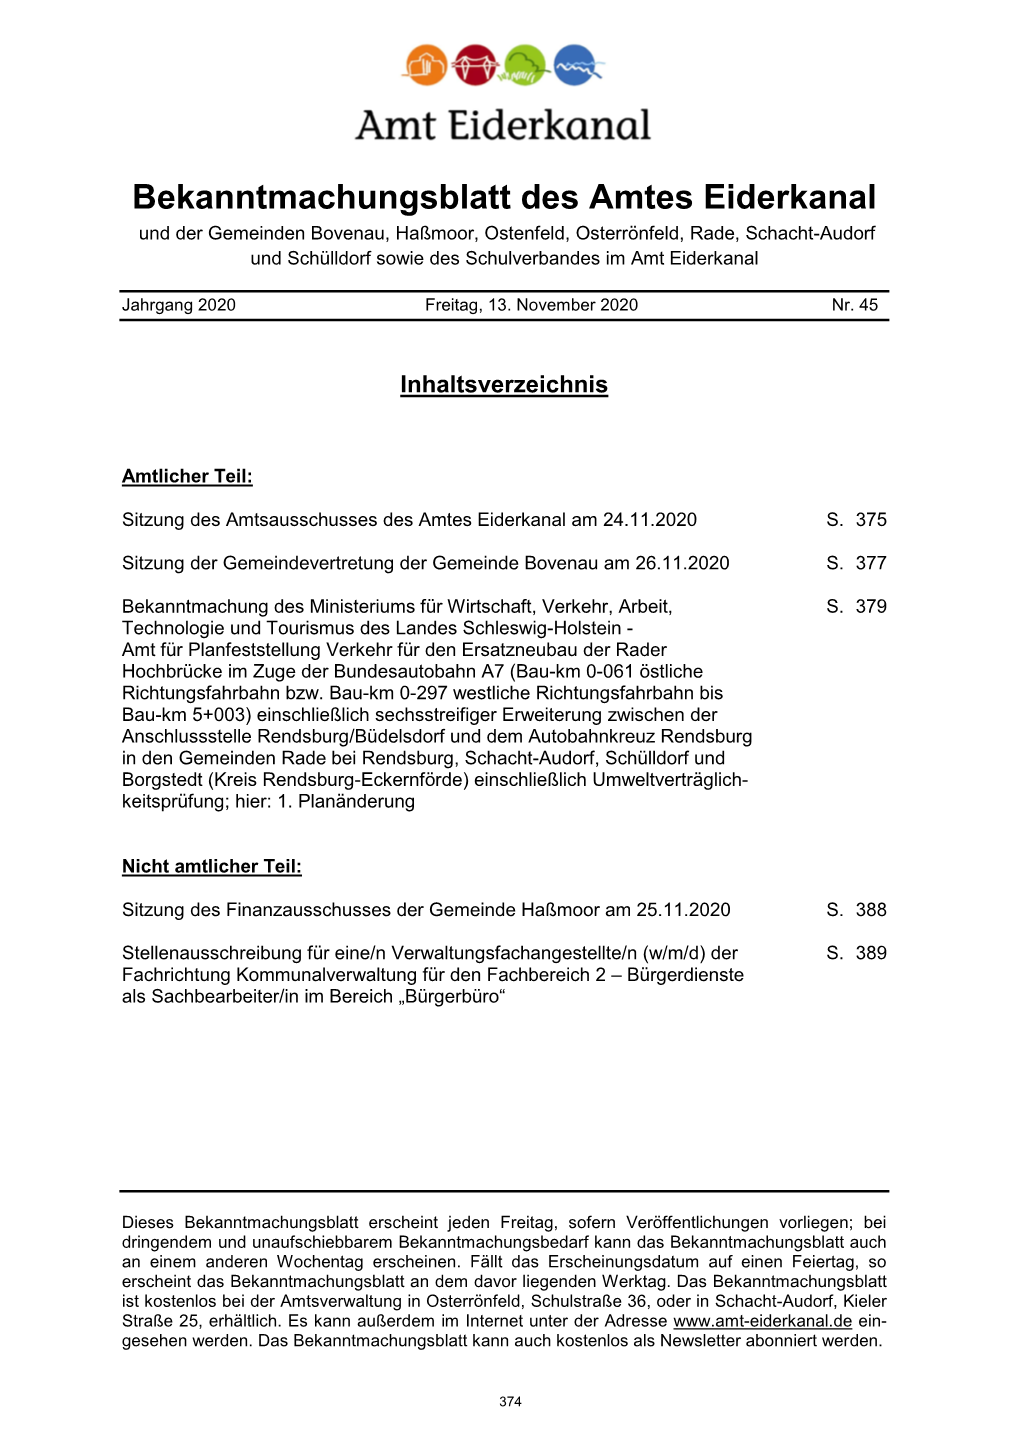 [PDF] Bekanntmachungsblatt Des Amtes Eiderkanal Nr. 45/2020